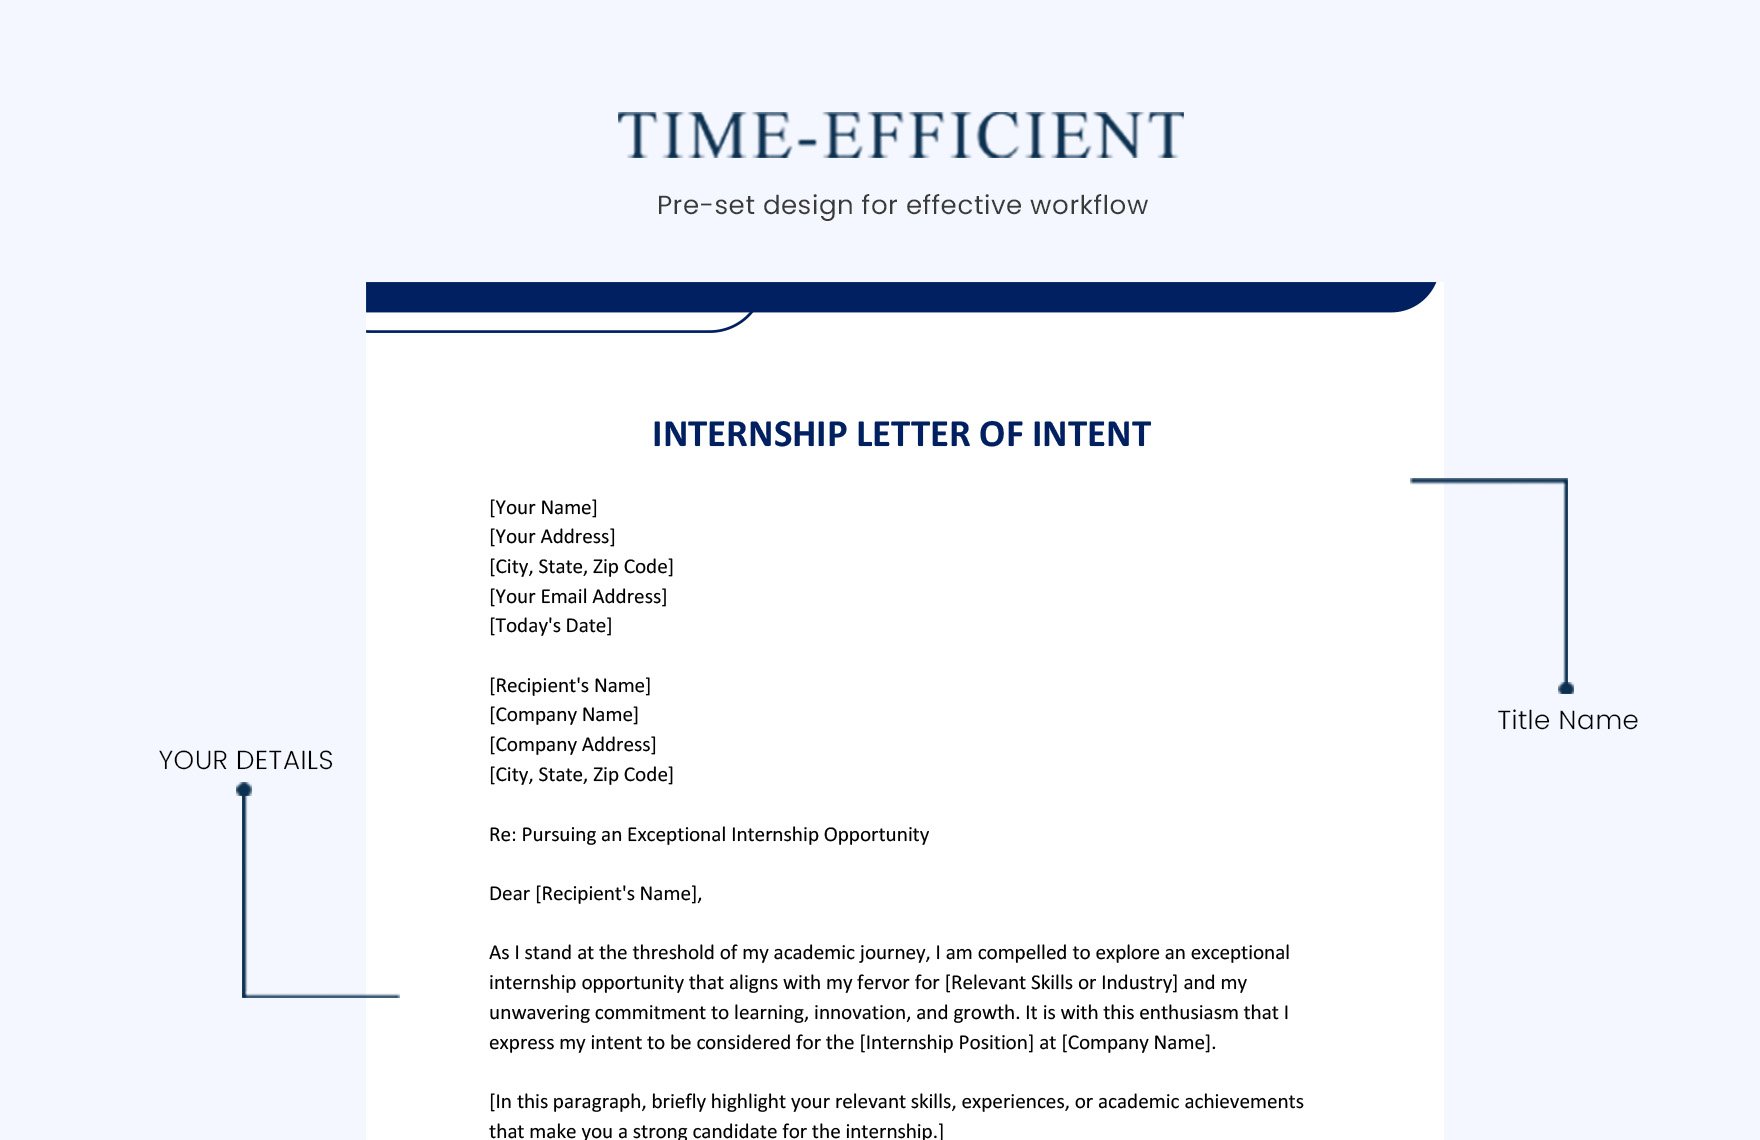 Internship Letter of Intent in Word, Google Docs Download